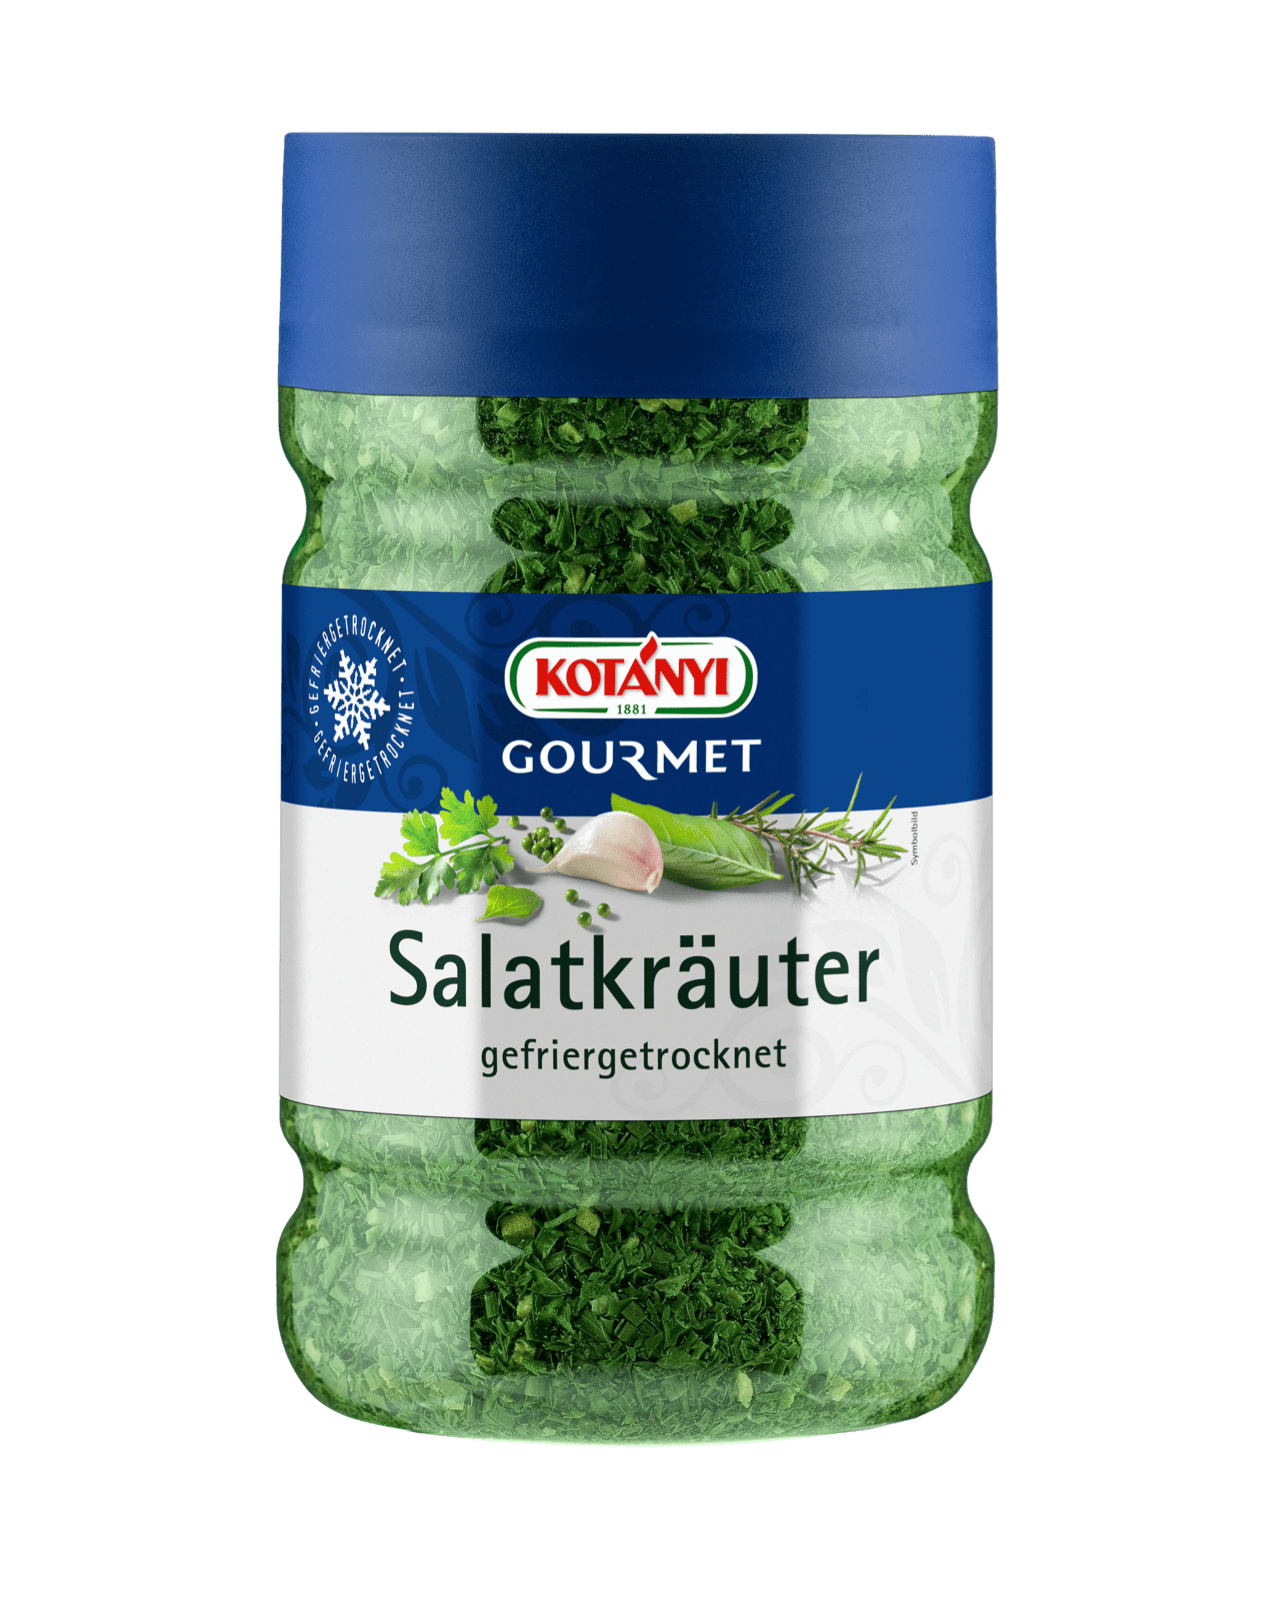 Kotányi Gourmet Salatkräuter gefriergetrocknet in der 1200ccm Dose